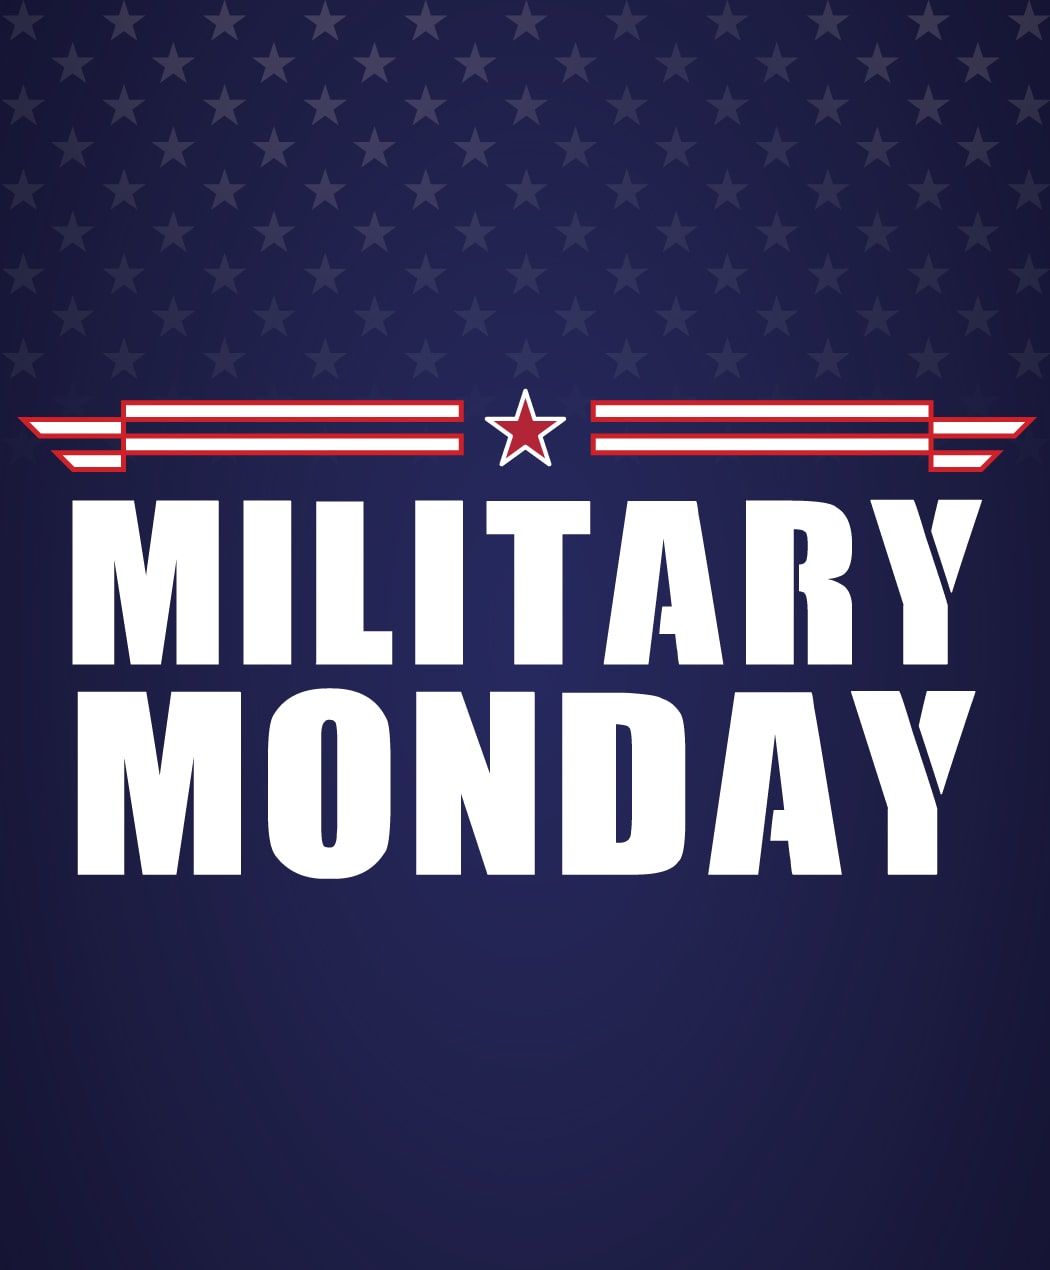 Military Monday